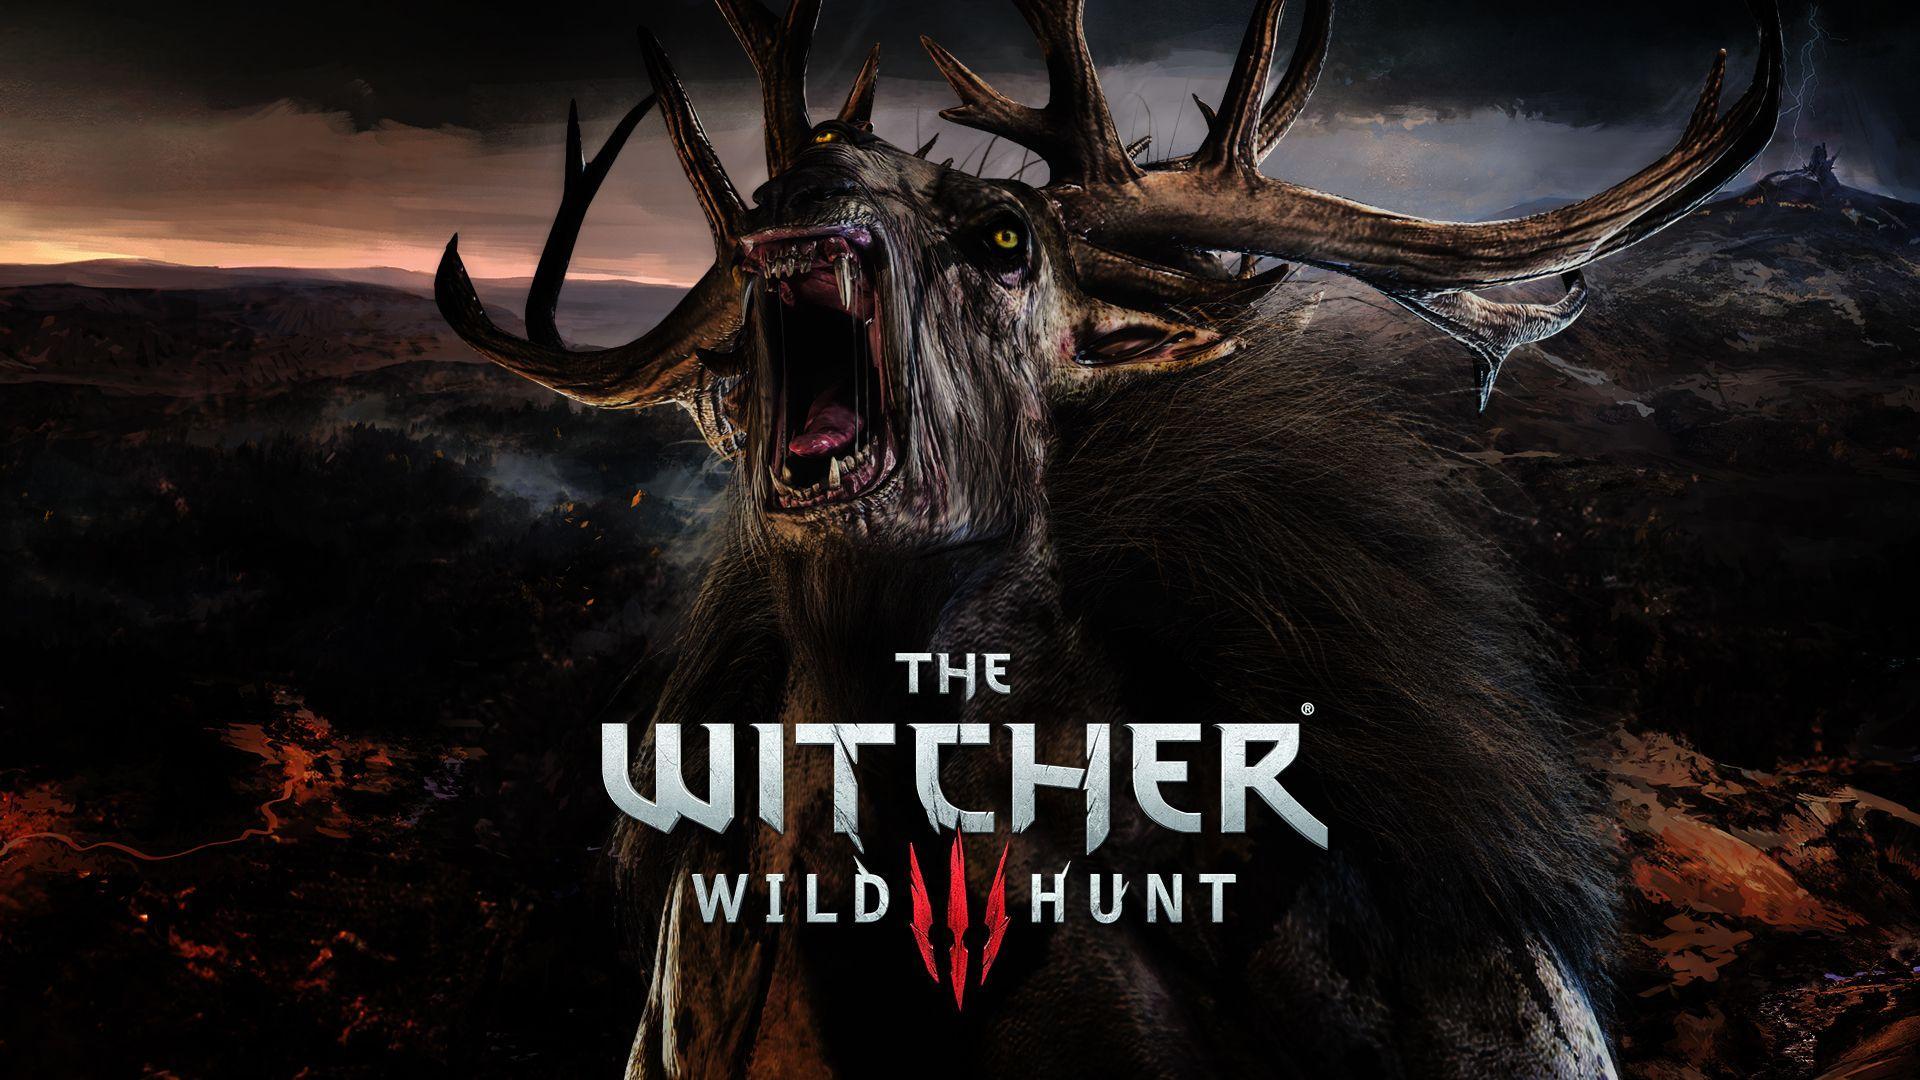 The Witcher 3 Wild Hunt lock screen wallpaper